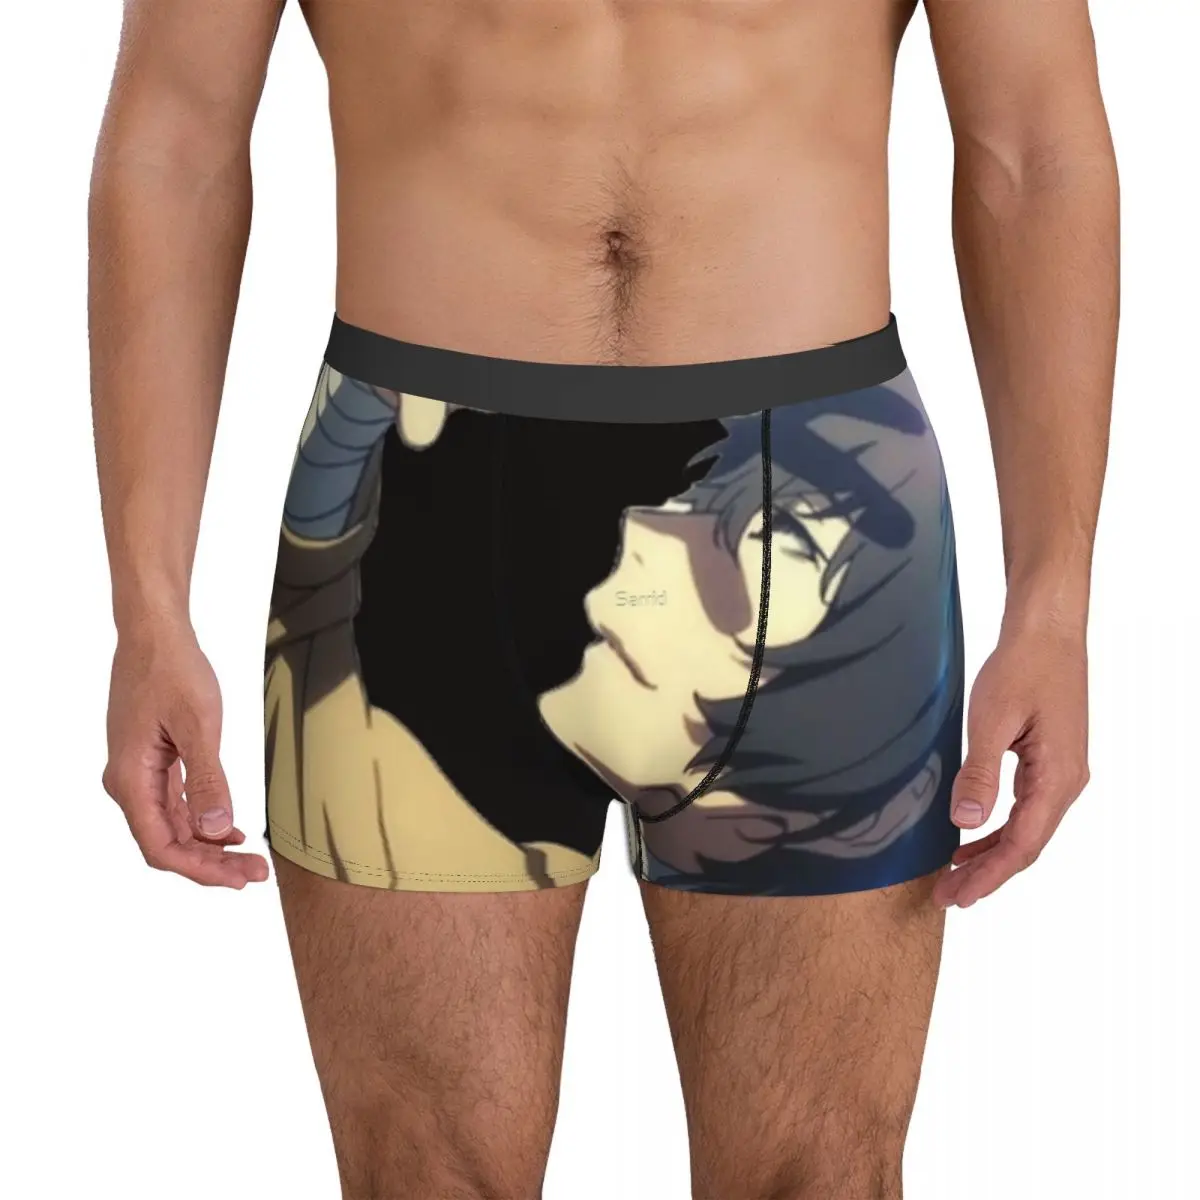 Dazai Osamu Underwear bungou stray dogs bsd husbando Design Trunk Hot Men Underpants Comfortable Shorts Briefs Gift